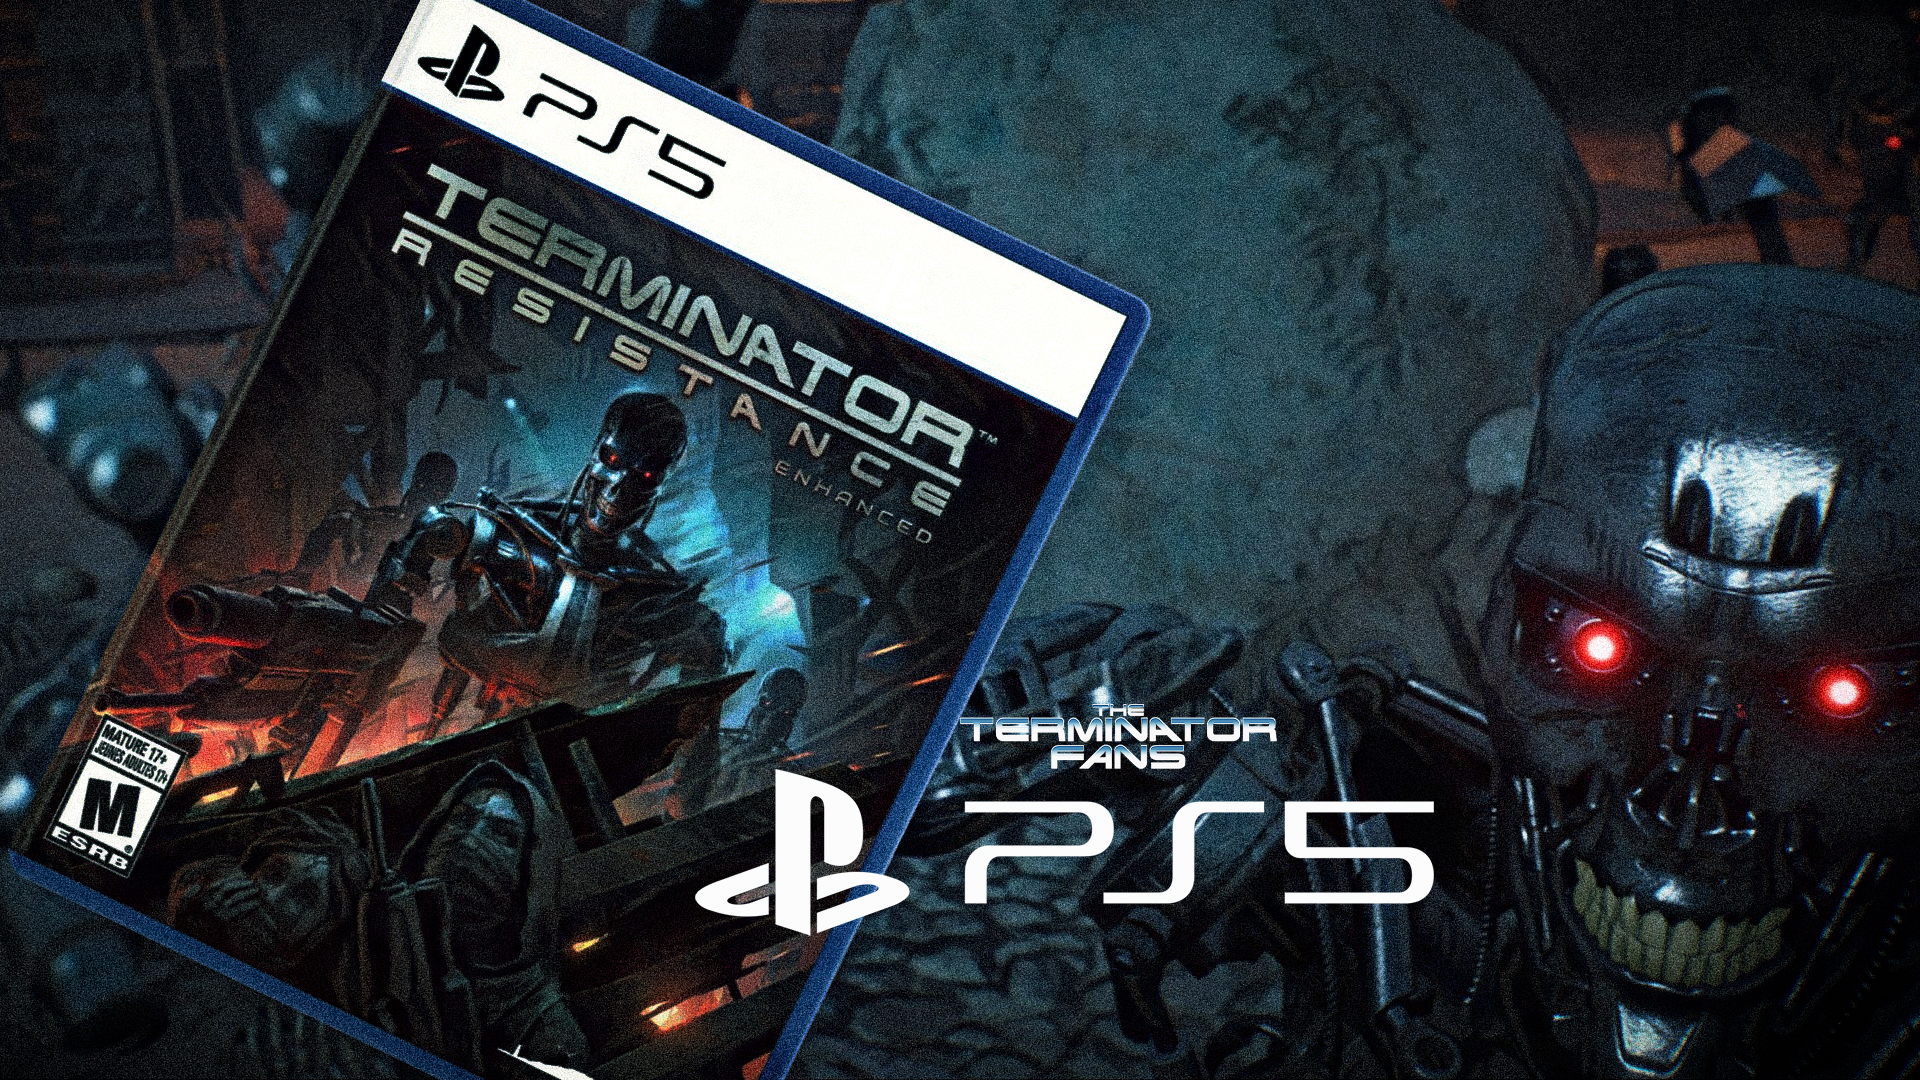 Terminator: Resistance ENHANCED, Paid DLC + Collector's Edition